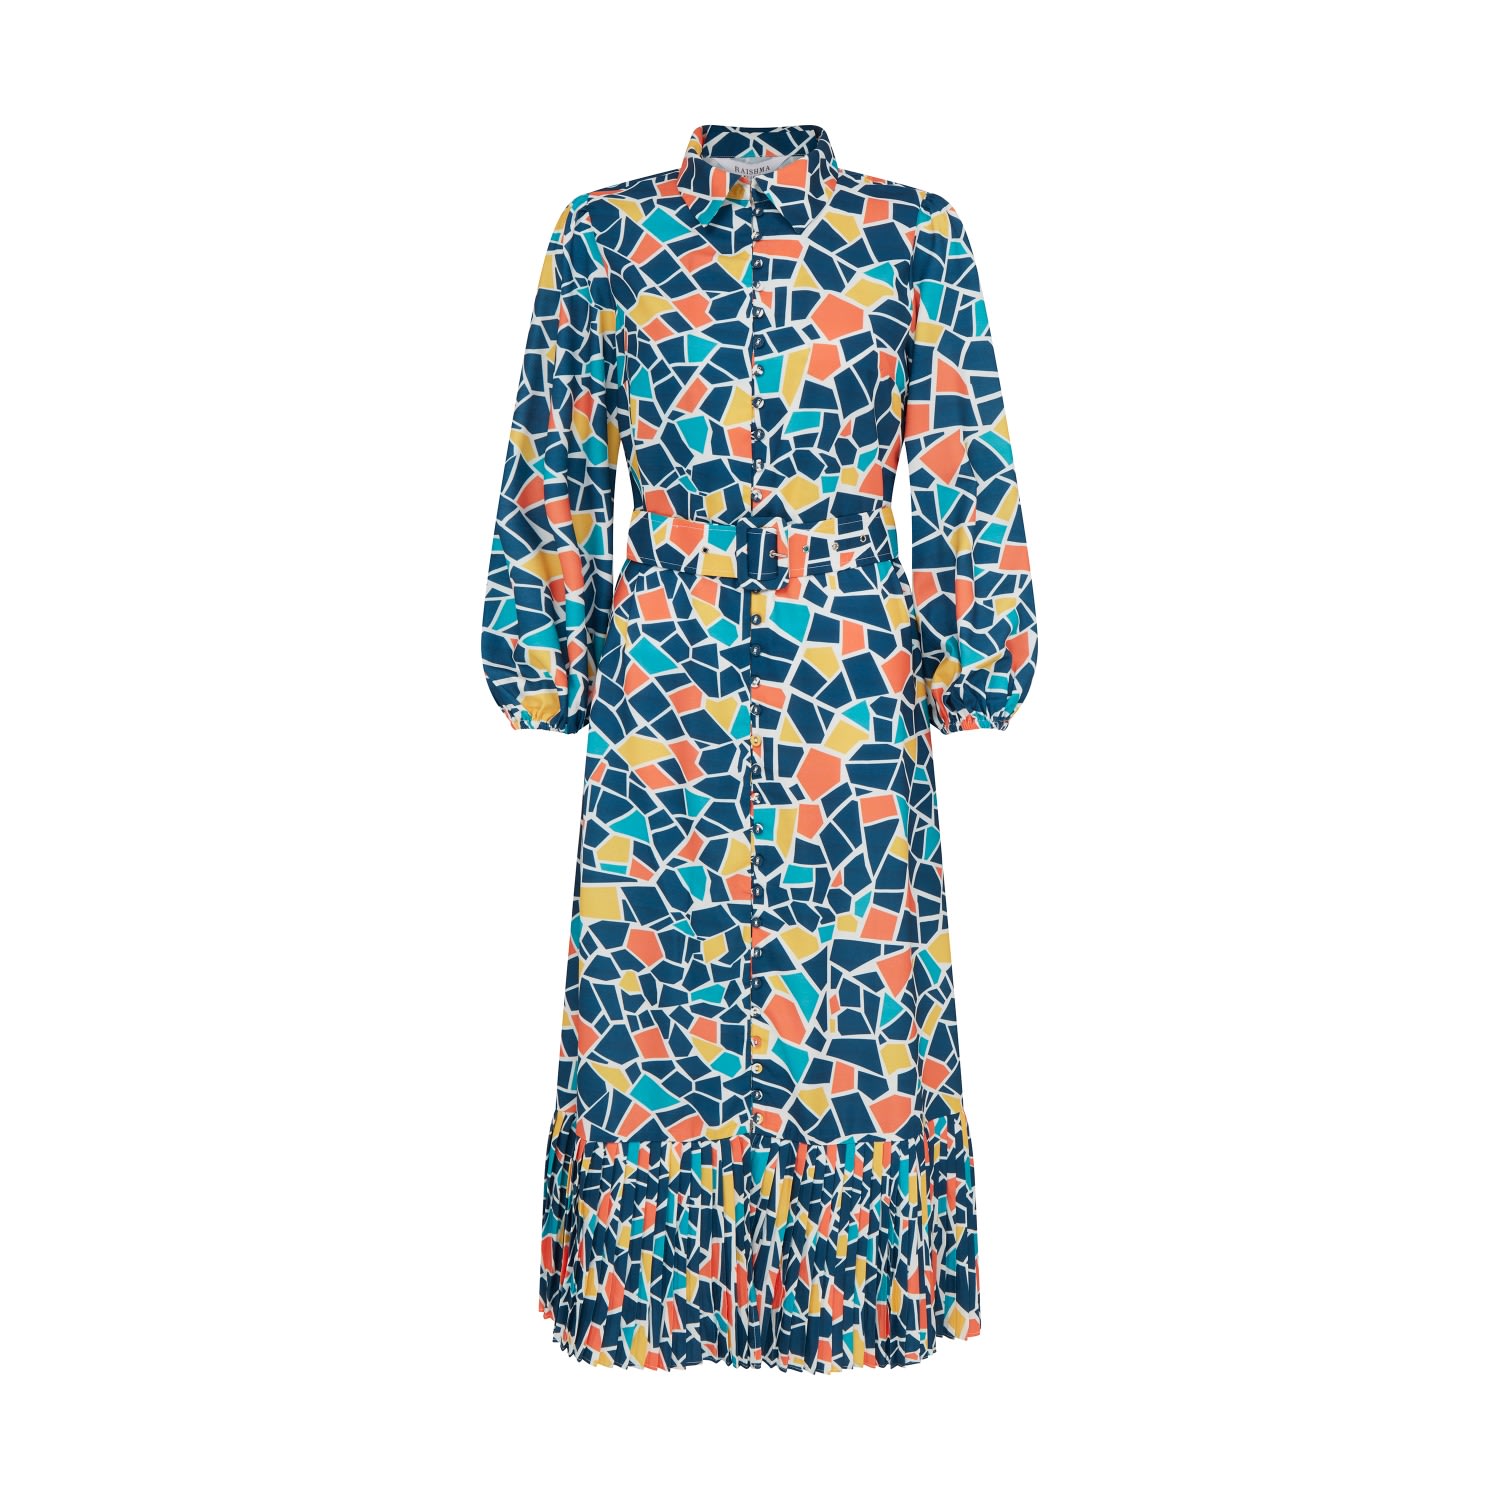 Raishma Women's Joy Vibrant Multicolored Geometric Print Long Sleeve Dress In Blue